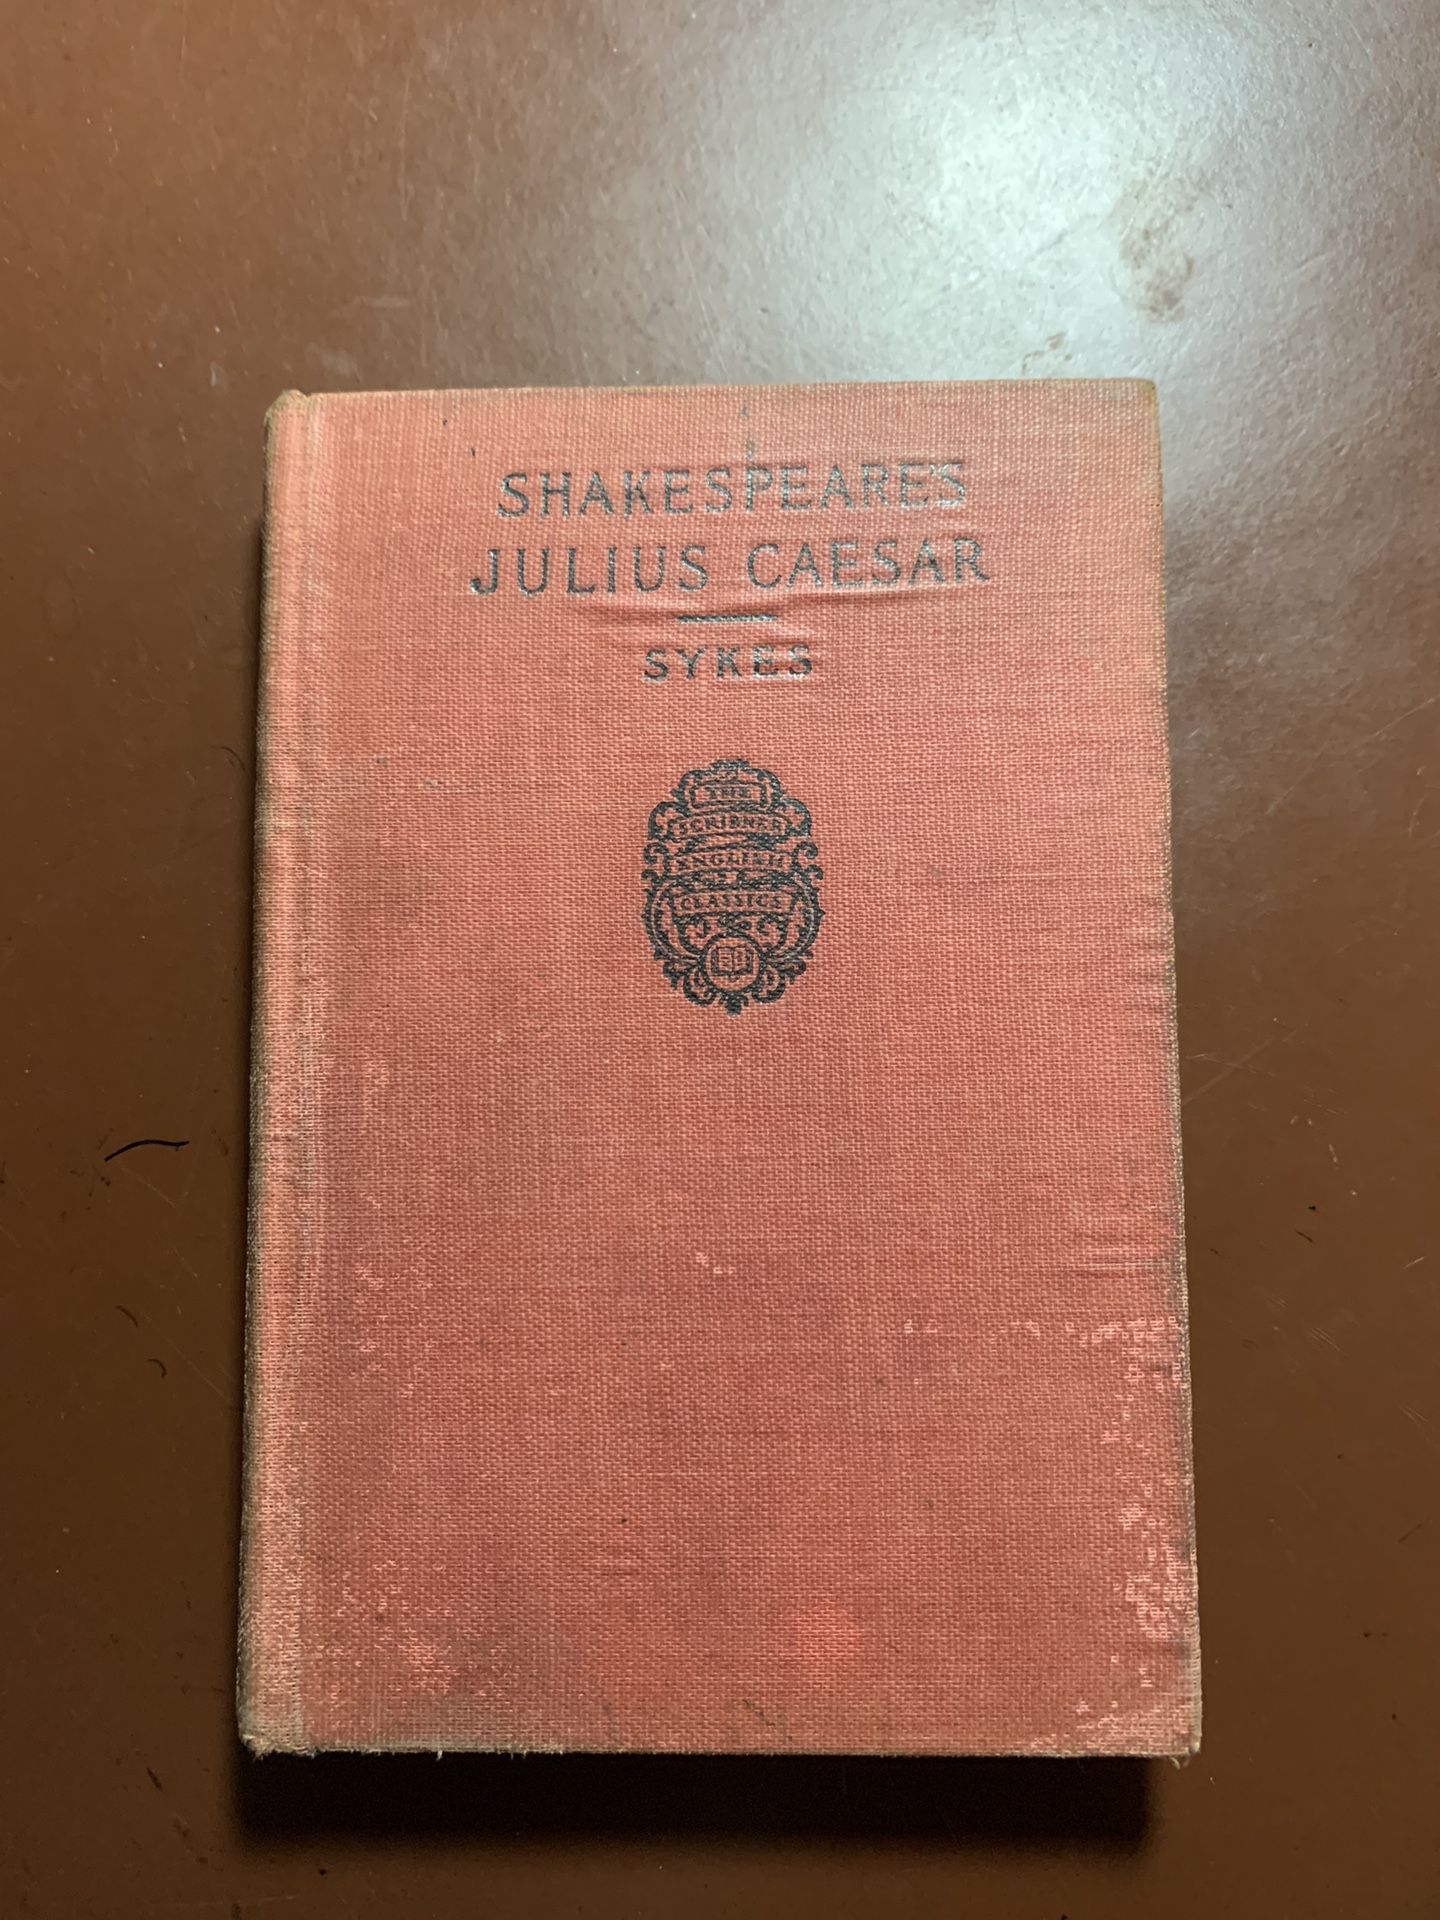 Vintage 1909 Edition of Shakespeare’s Julius Caesar- Hard Cover